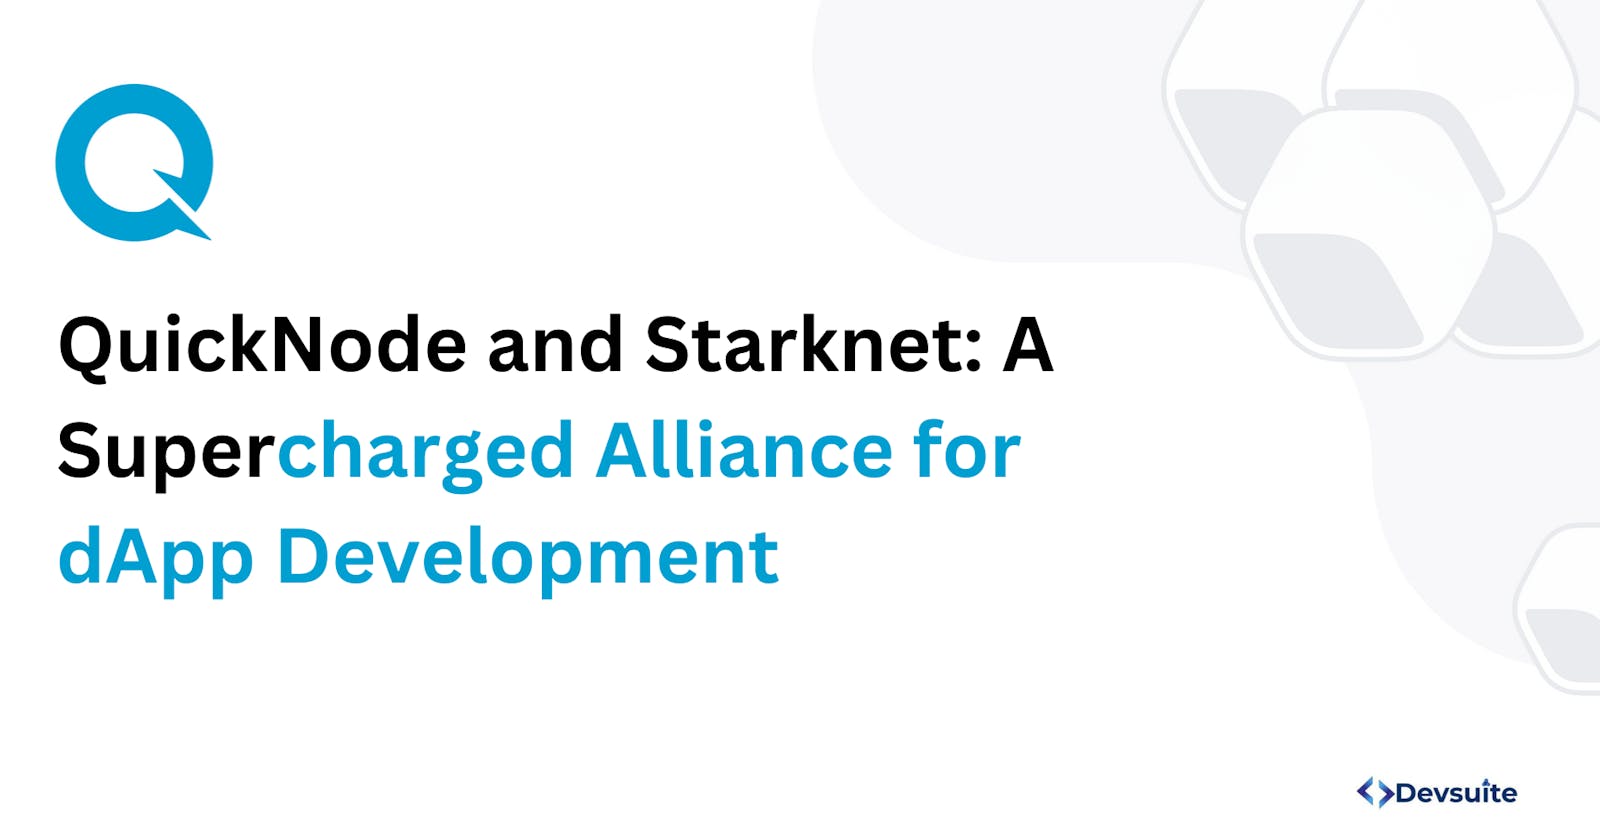 QuickNode and Starknet: A Supercharged Alliance for dApp Development